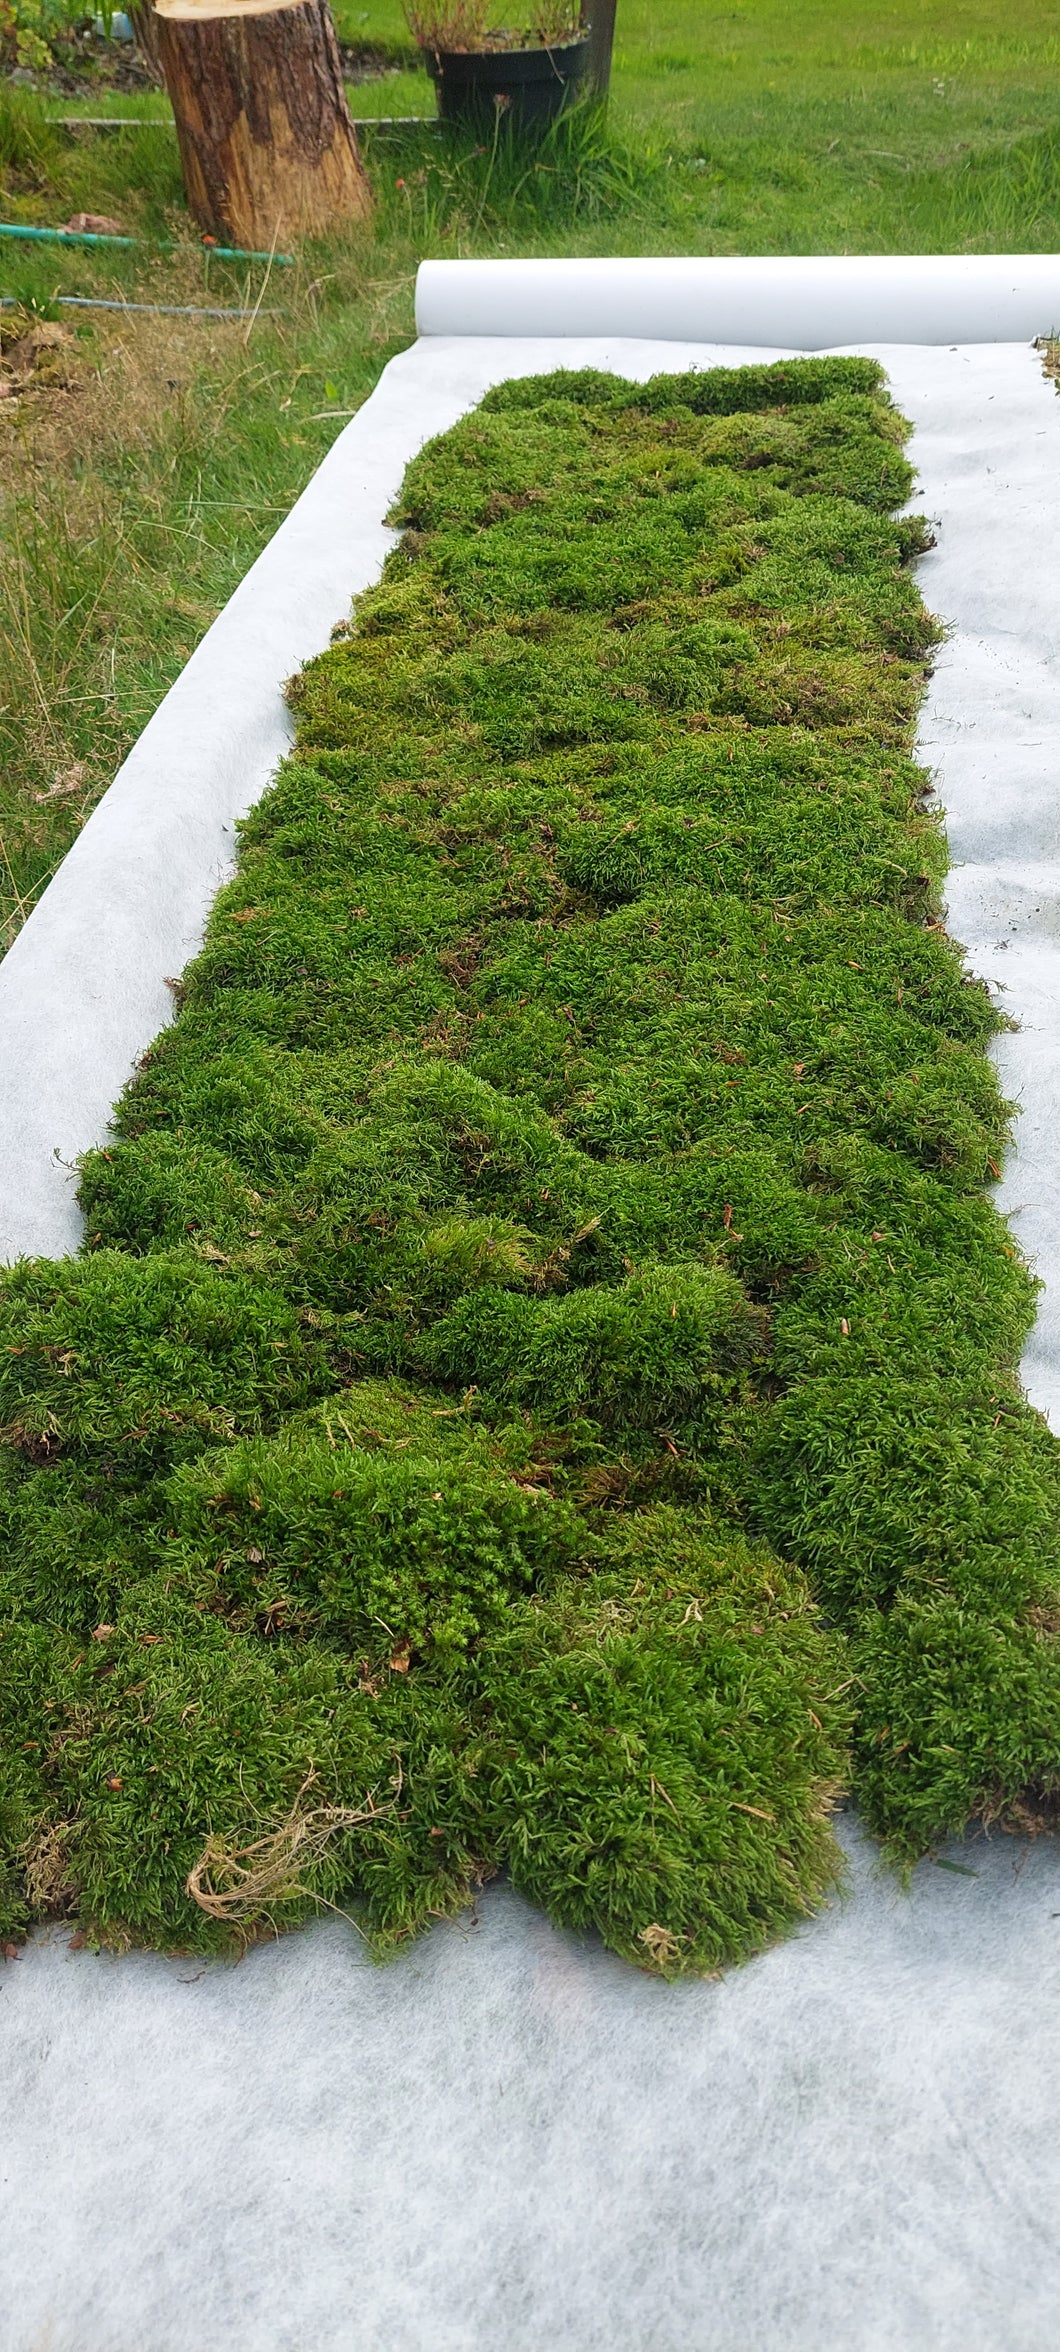 Hypnales Carpet Moss Lawn